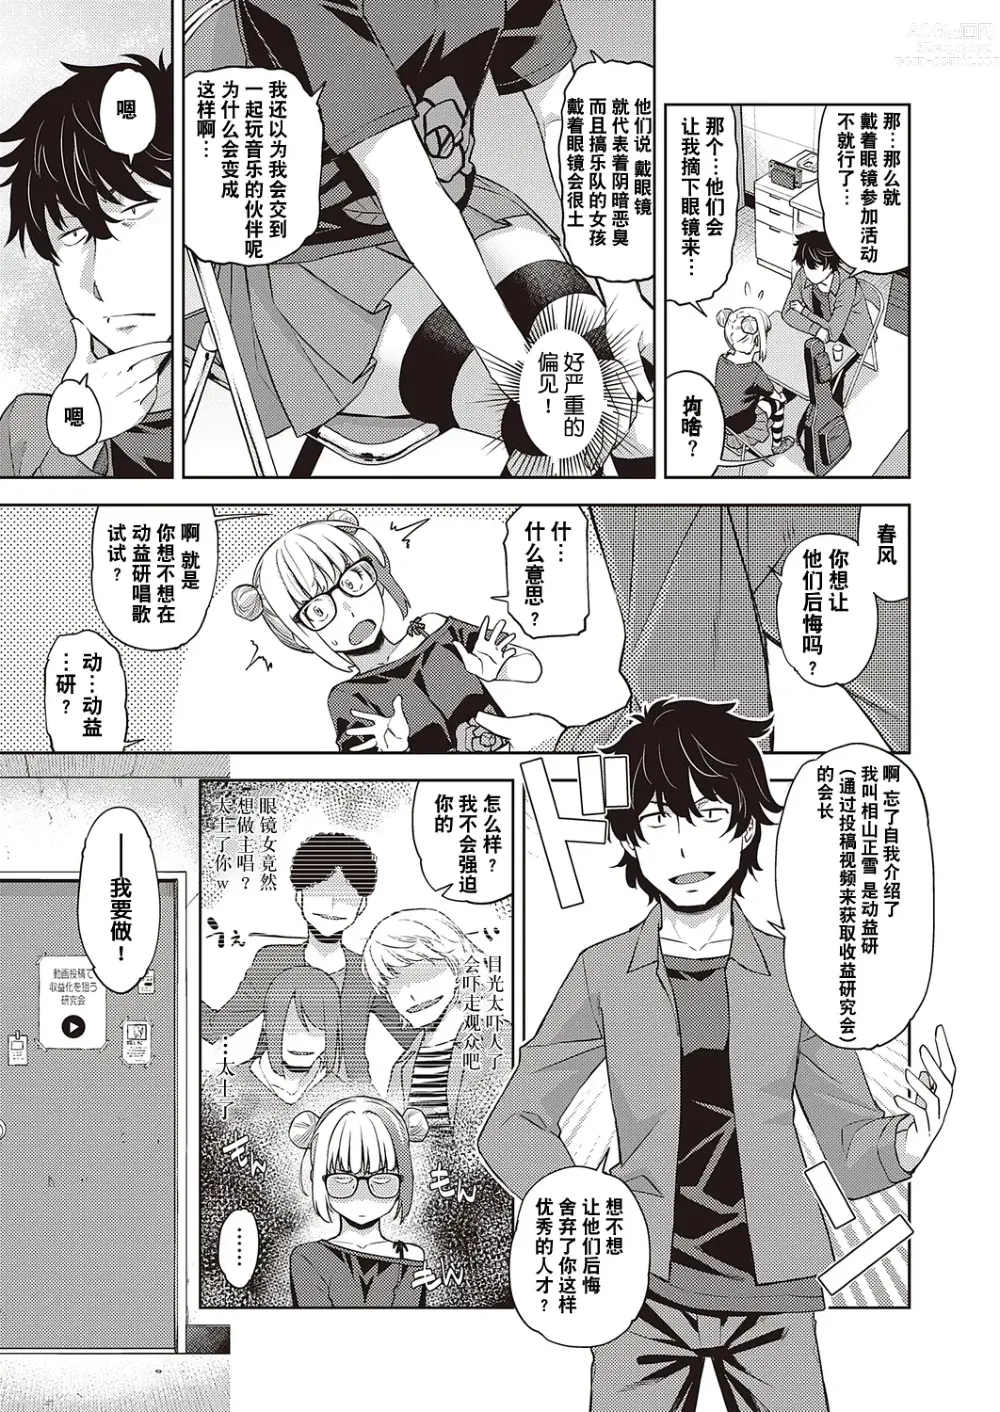 Page 3 of manga Houkago Megane Club